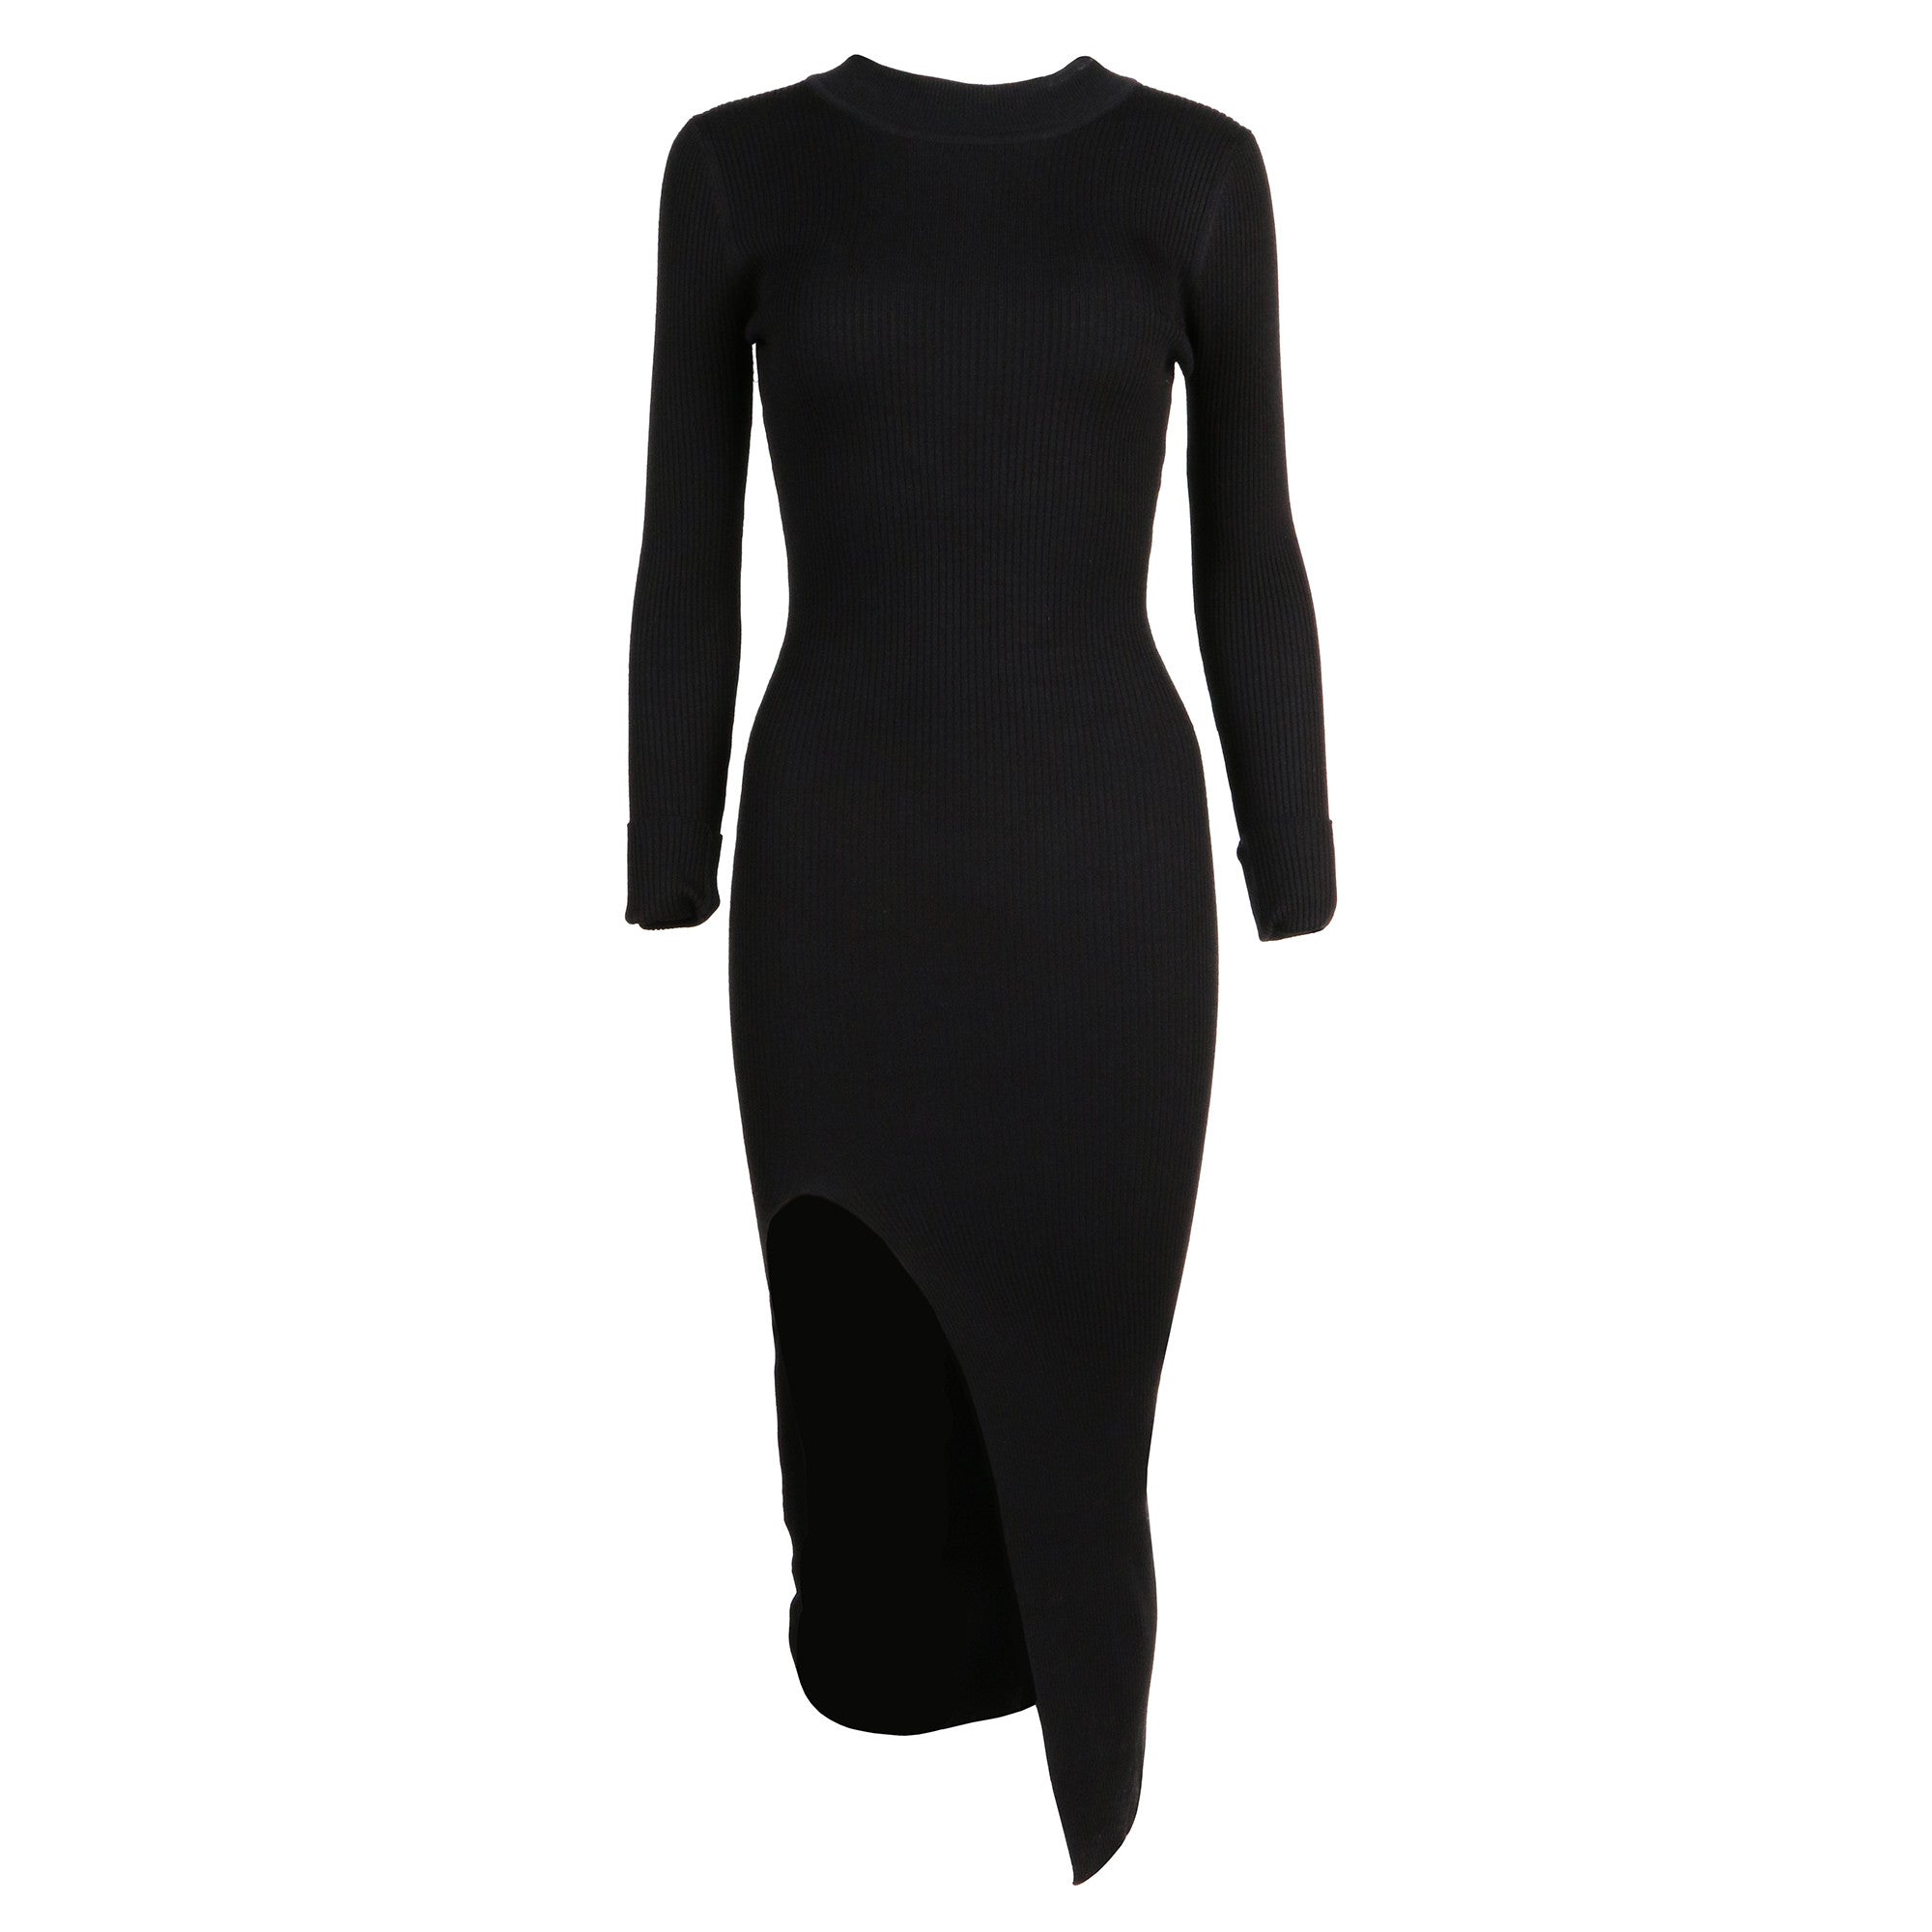 Ribbed Slit Maxi Dress - Black Dress - Bodycon Dress – 2020AVE